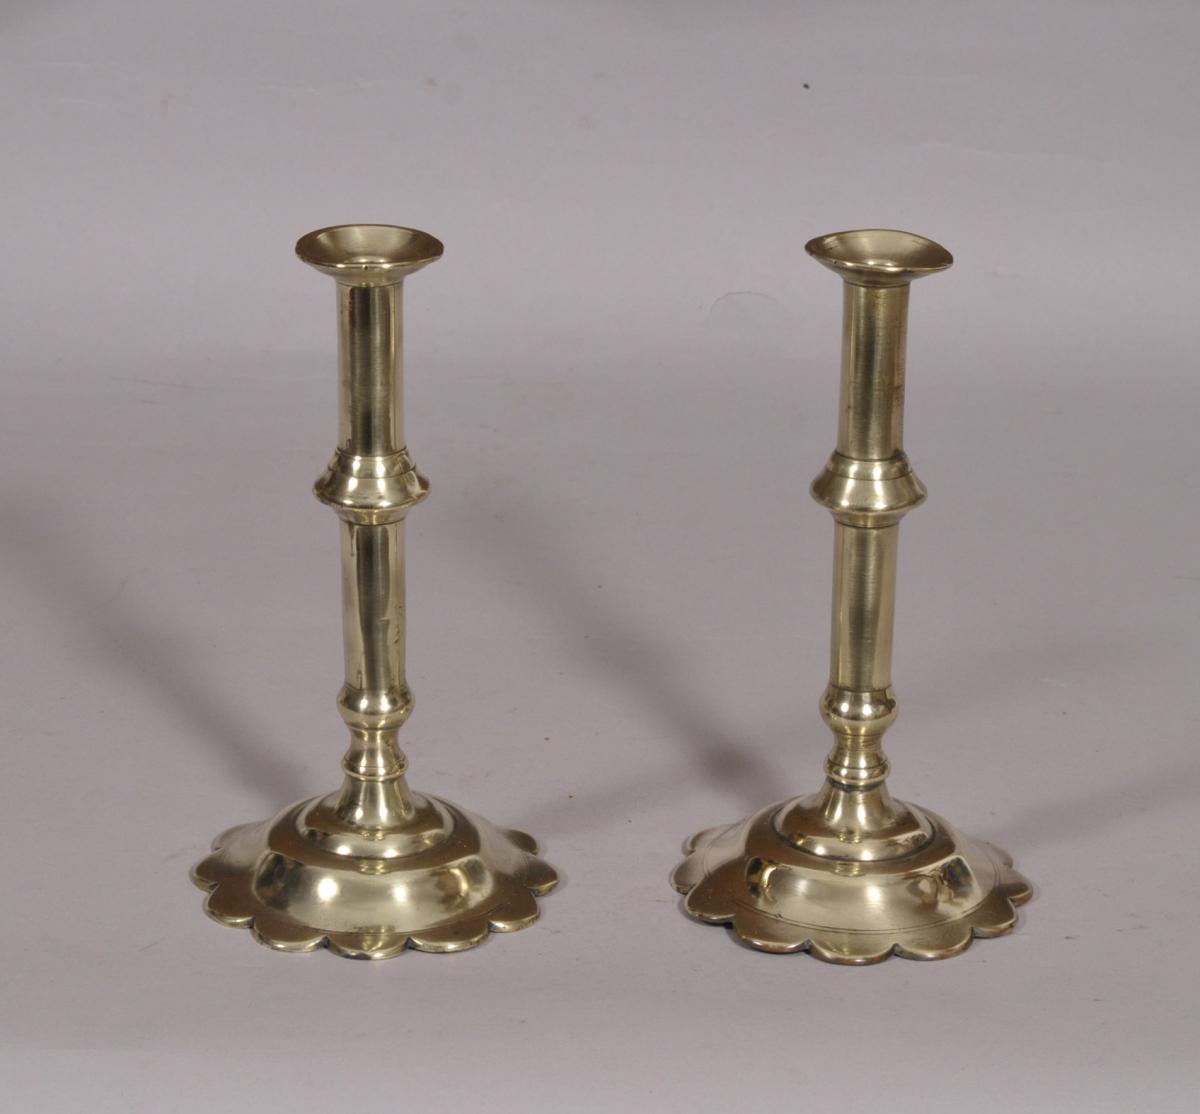 S/3990 Antique 18th Century Pair of Brass Petal Base Candlesticks